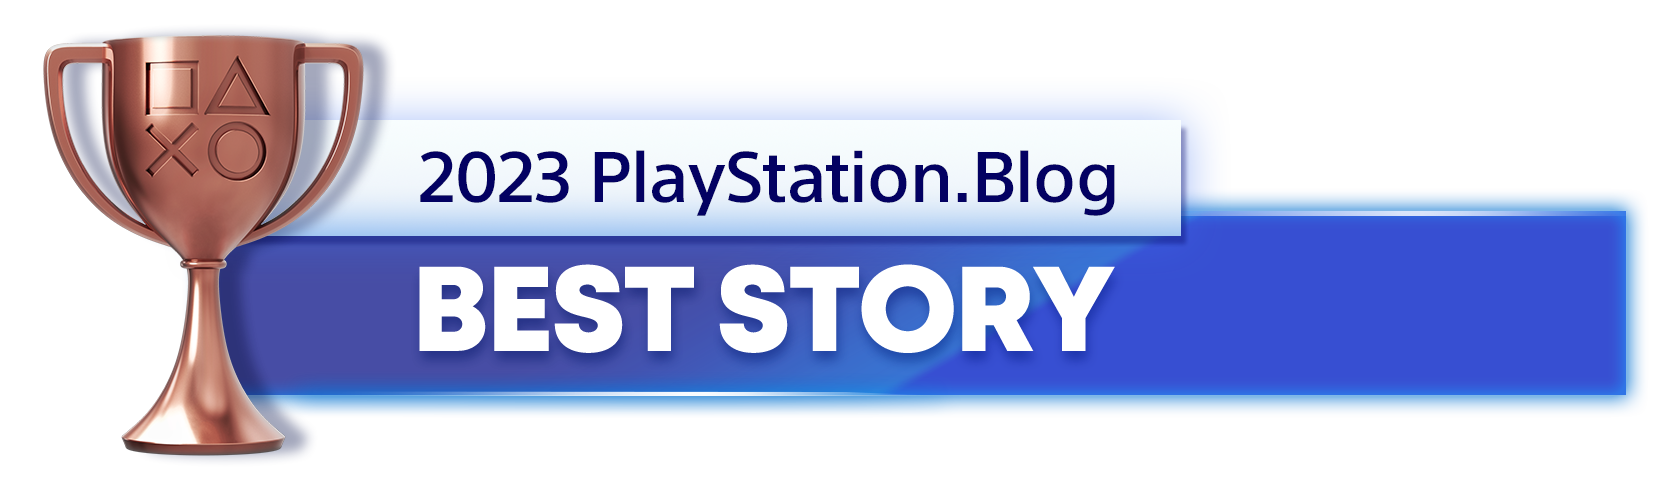  "Bronze Trophy for the 2023 PlayStation Blog Best Story Winner"